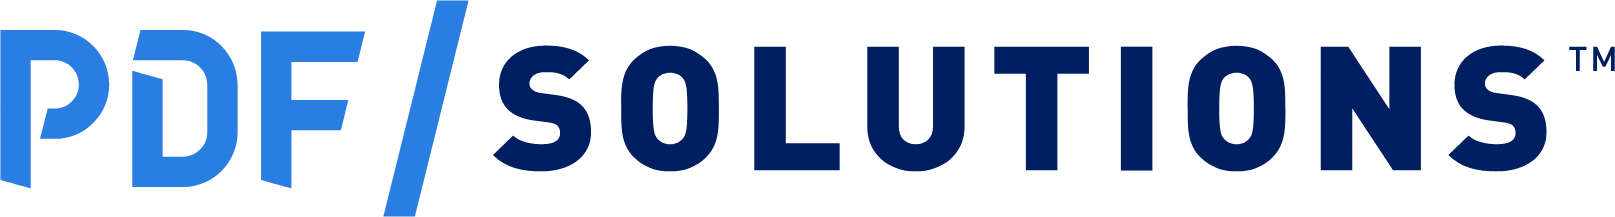 PDF Solutions logo large (transparent PNG)